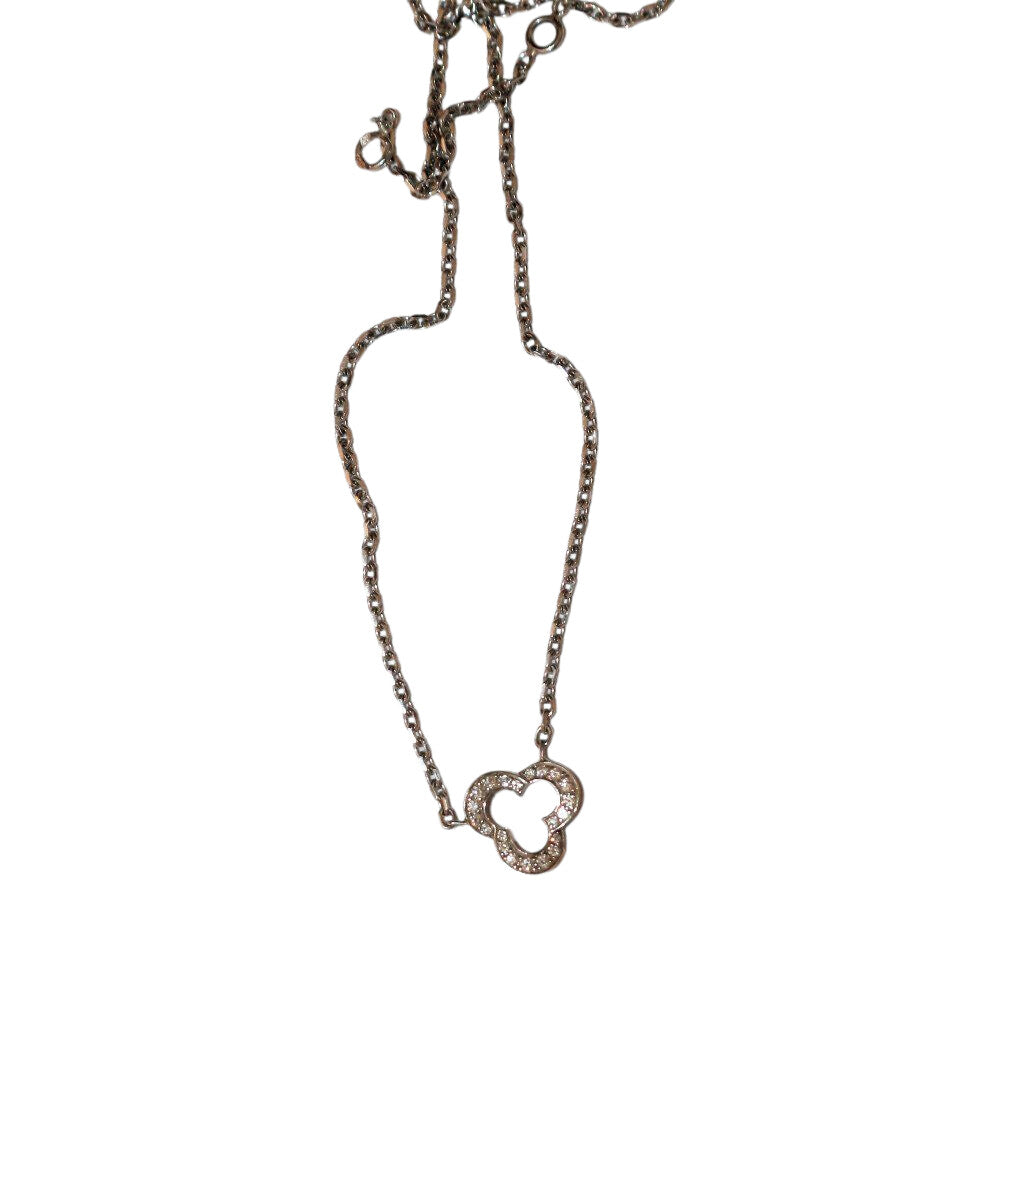 CHANEL “Camélia Mini” necklace